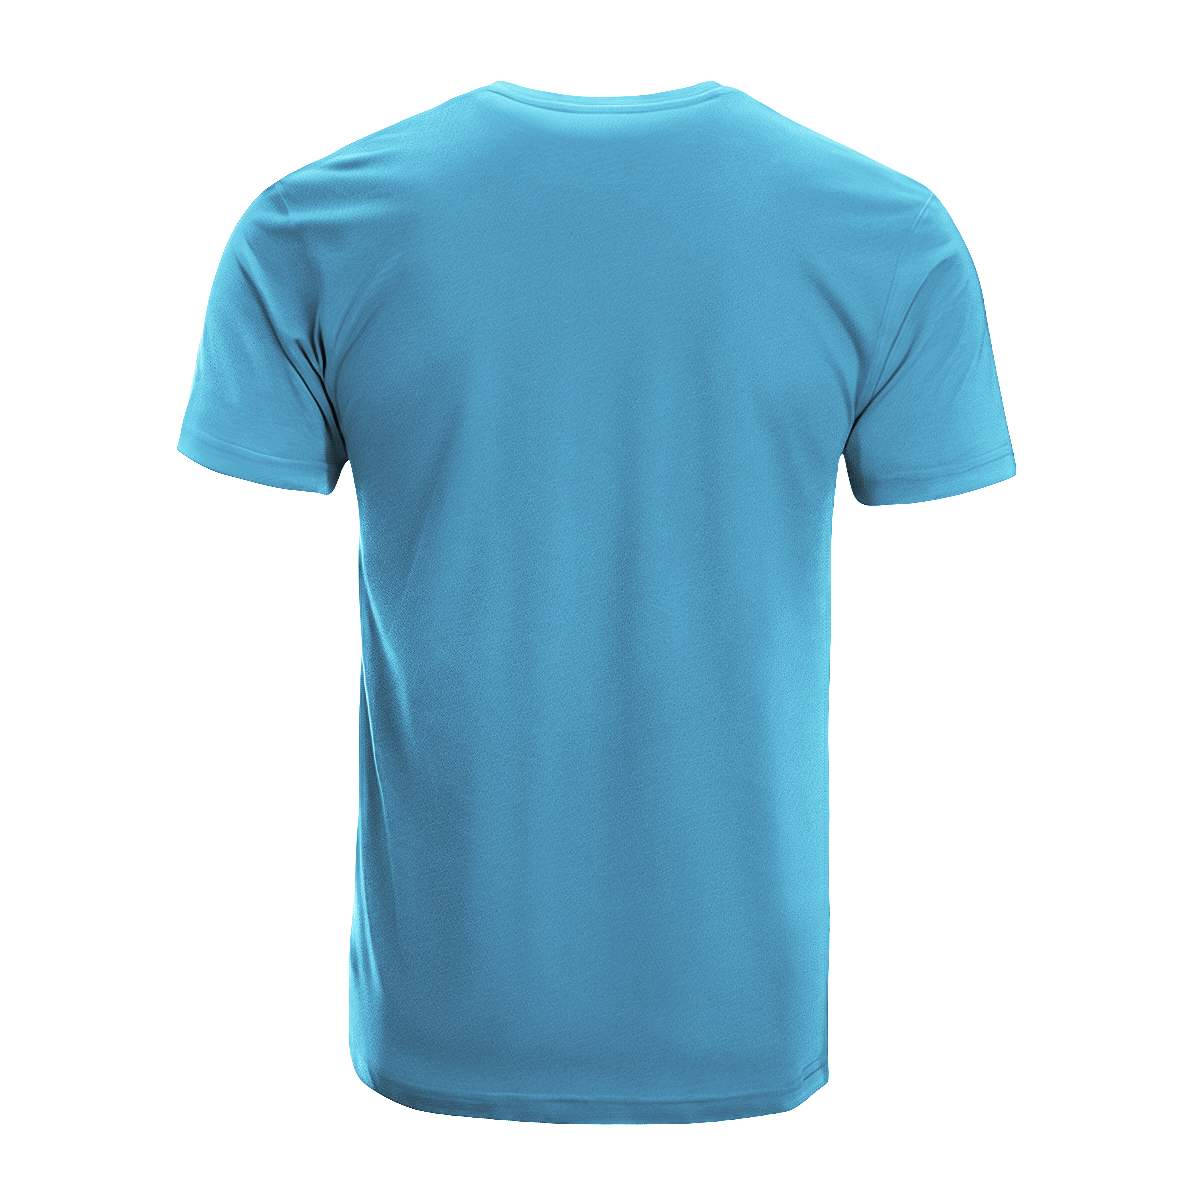 Elphinstone Tartan Crest T-shirt - I'm not yelling style